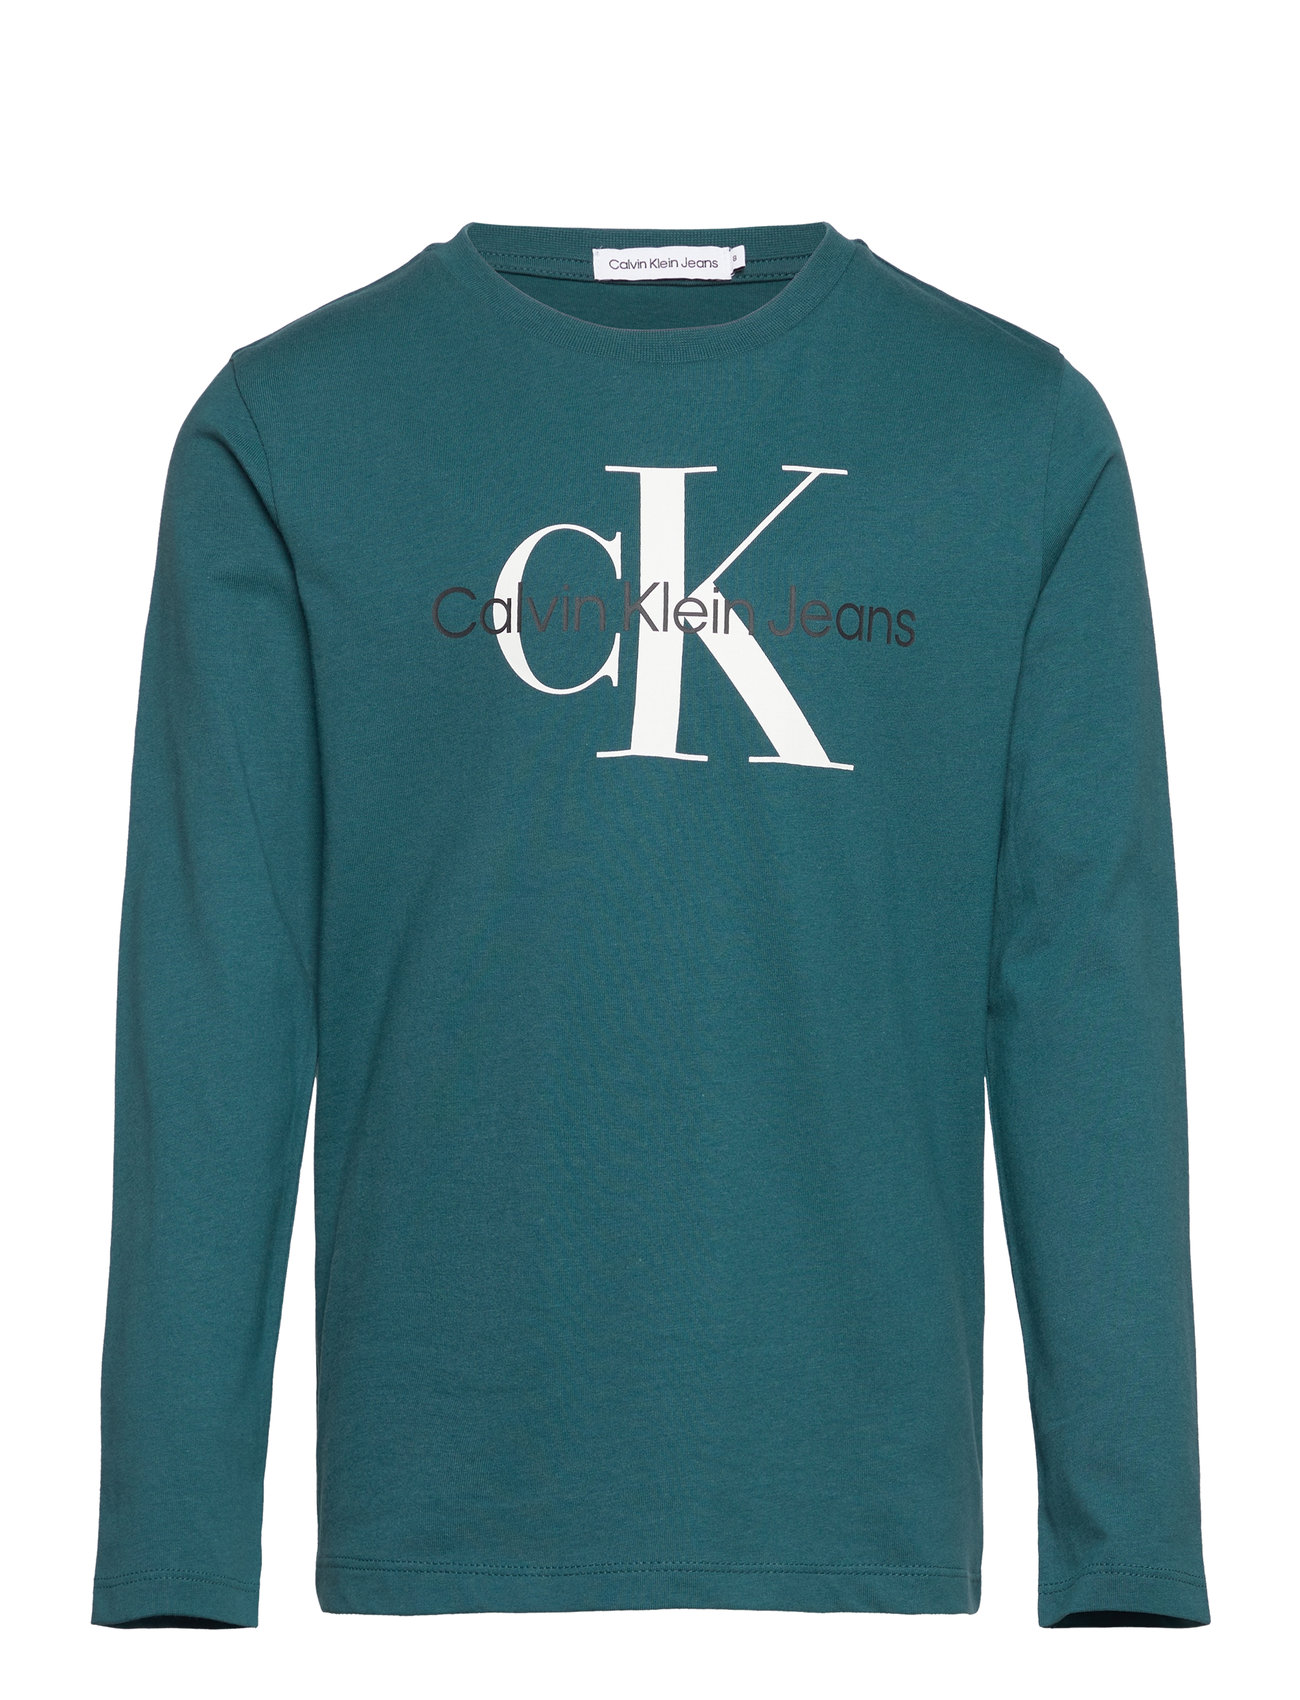 Ck Monogram Ls T-Shirt Tops T-shirts Long-sleeved T-shirts Green Calvin Klein